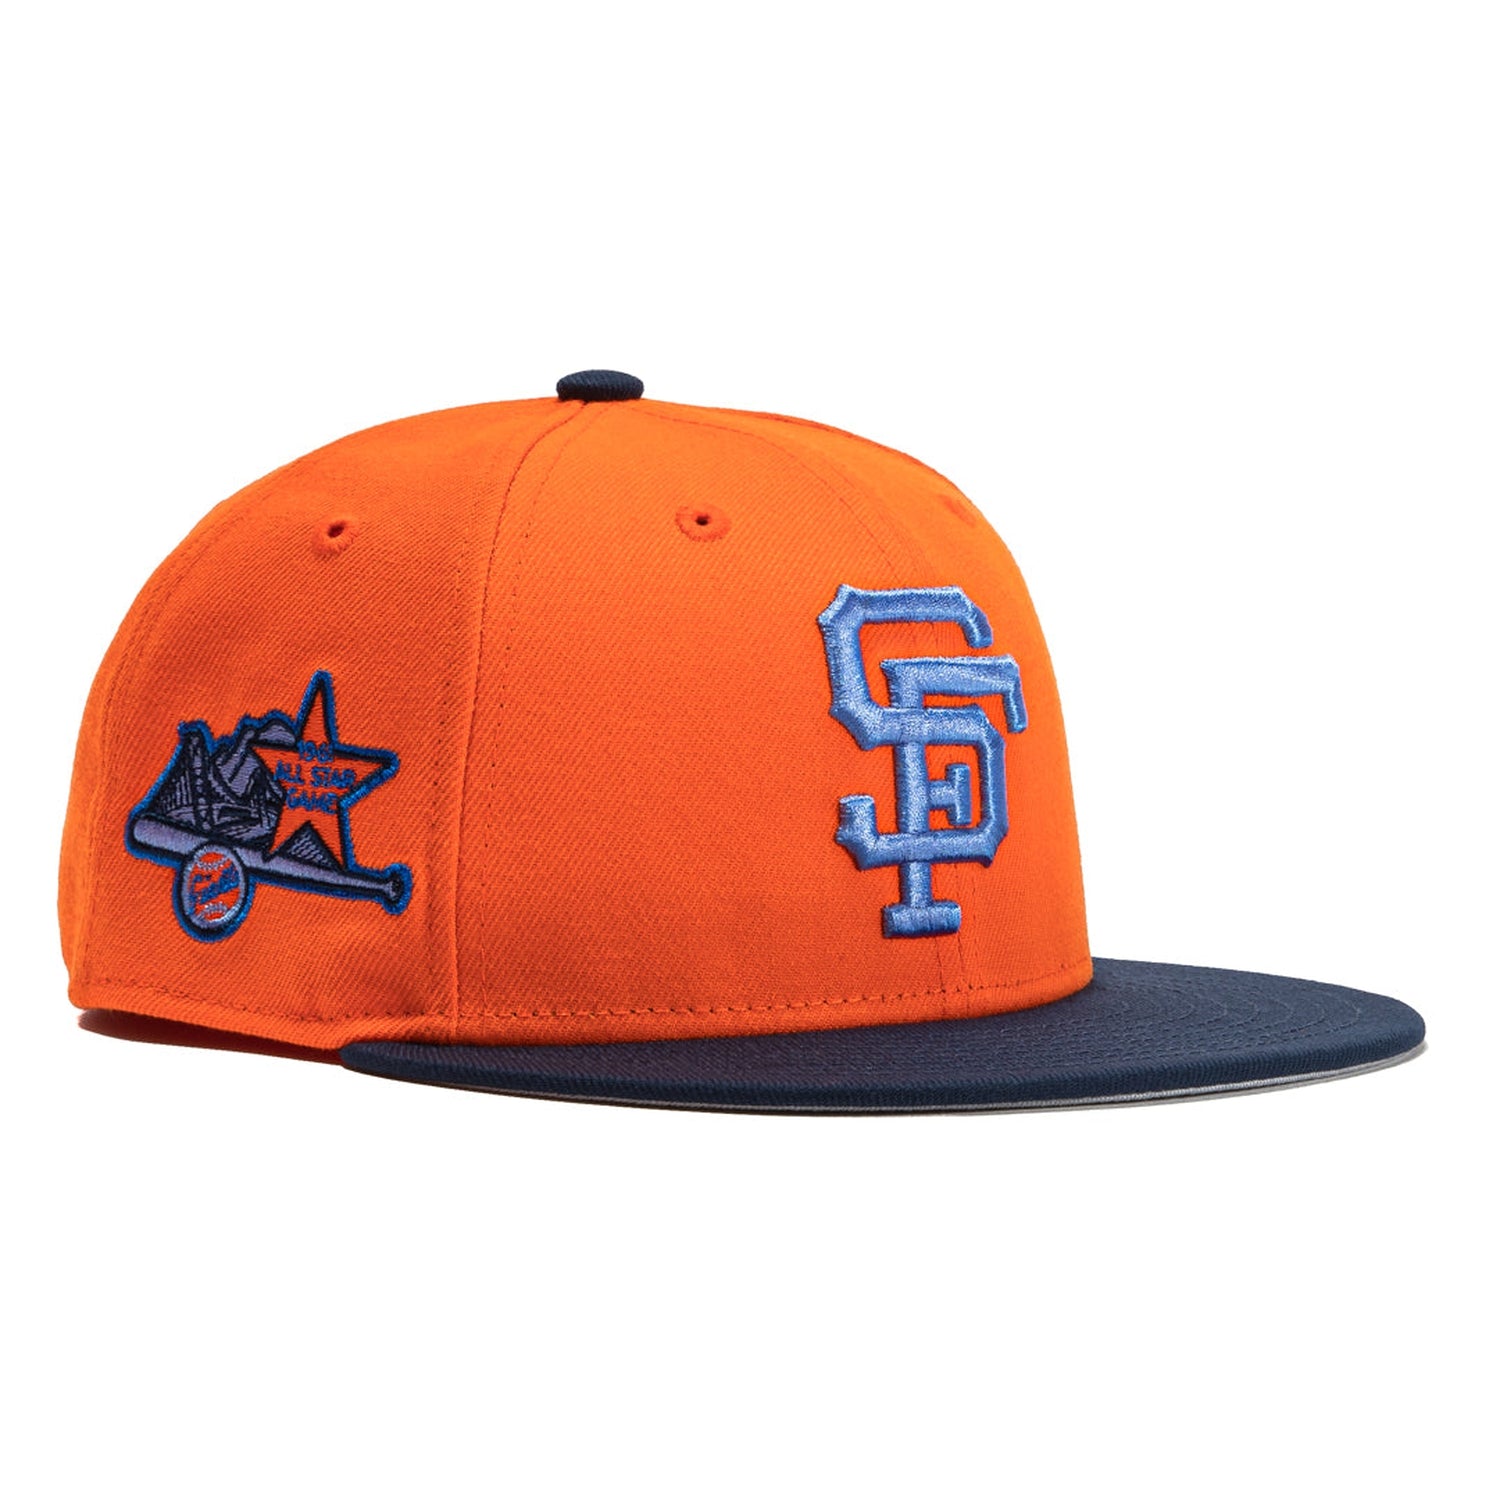 New Era 59FIFTY Orange Crush San Francisco Giants 1961 All Star Game Patch Hat - Orange, Navy Orange/Navy / 7 1/8